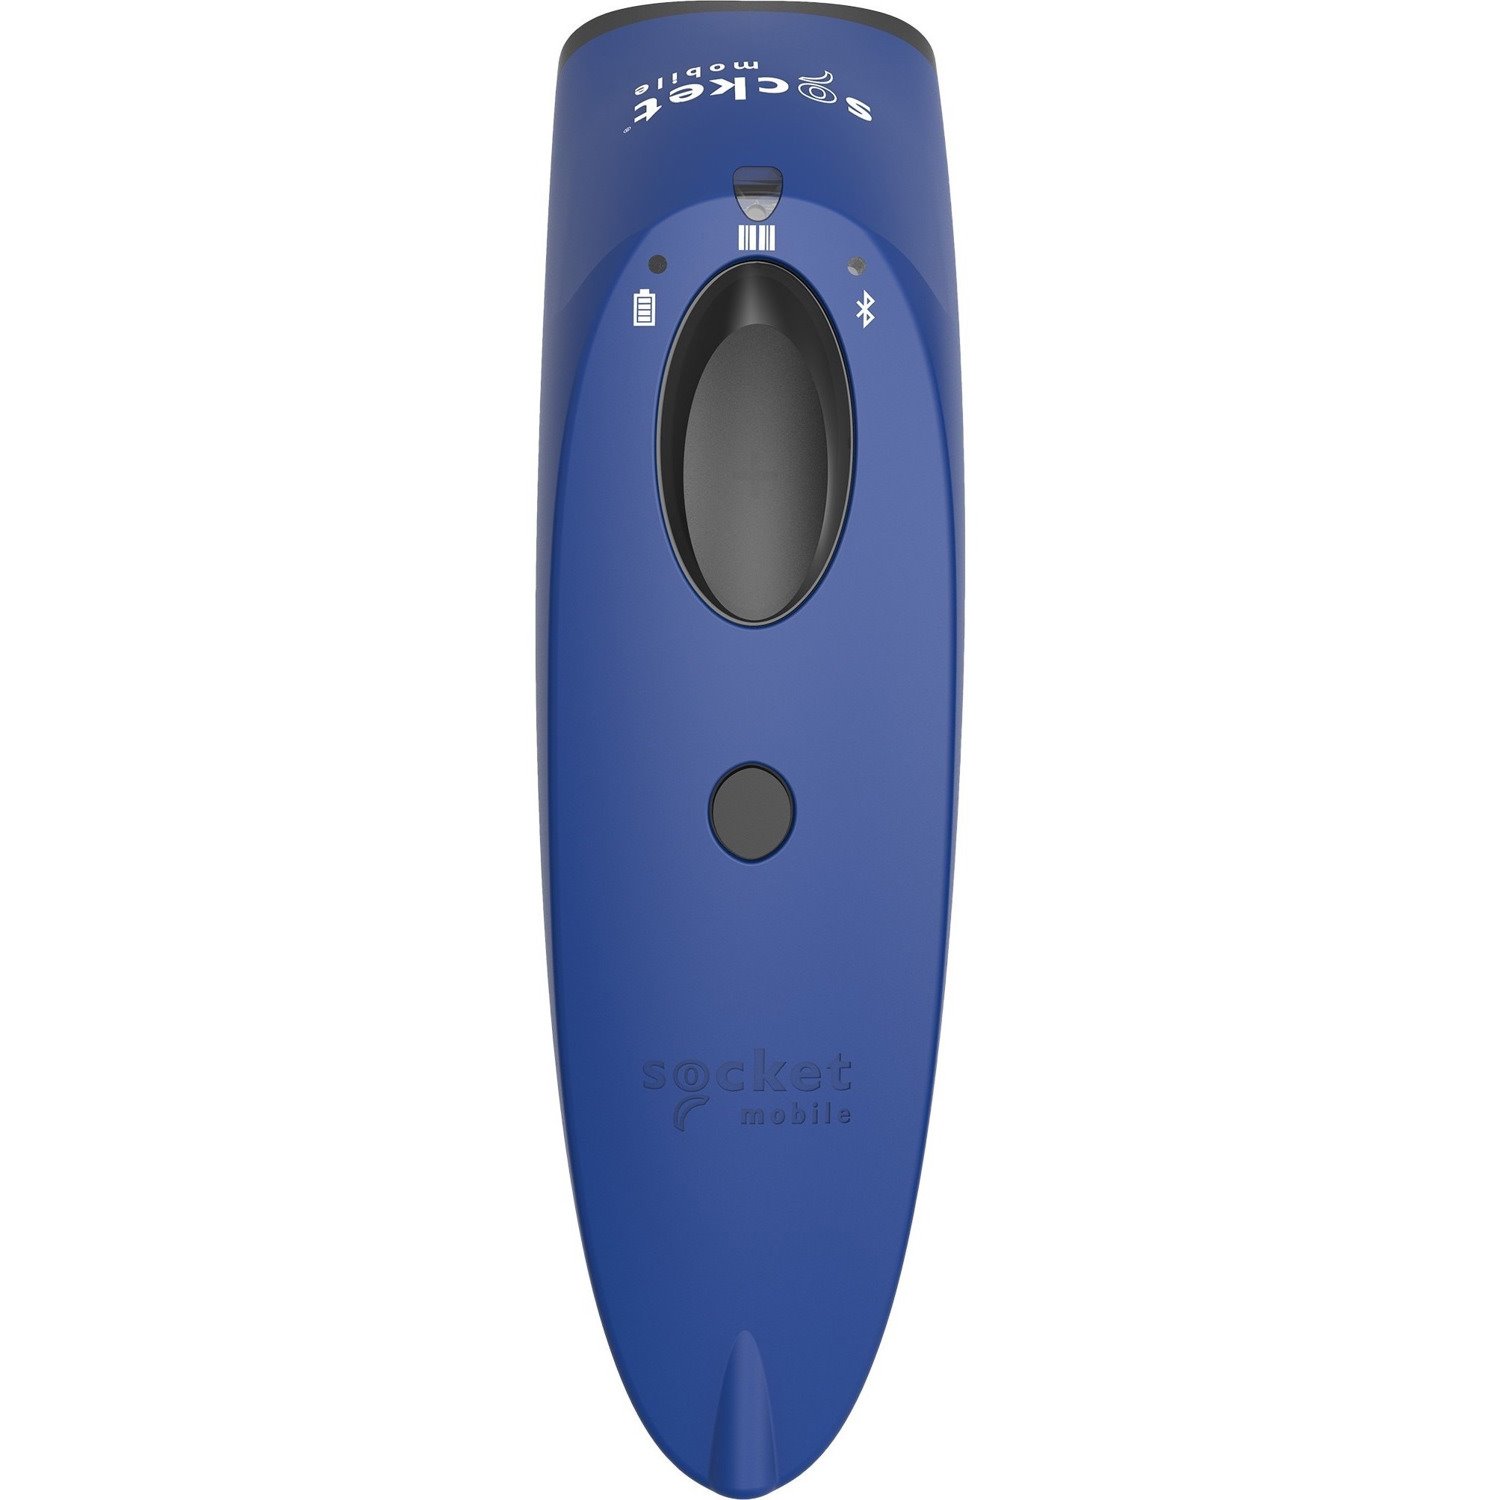 Socket Mobile SocketScan S730 Handheld Barcode Scanner - Wireless Connectivity - Blue, White